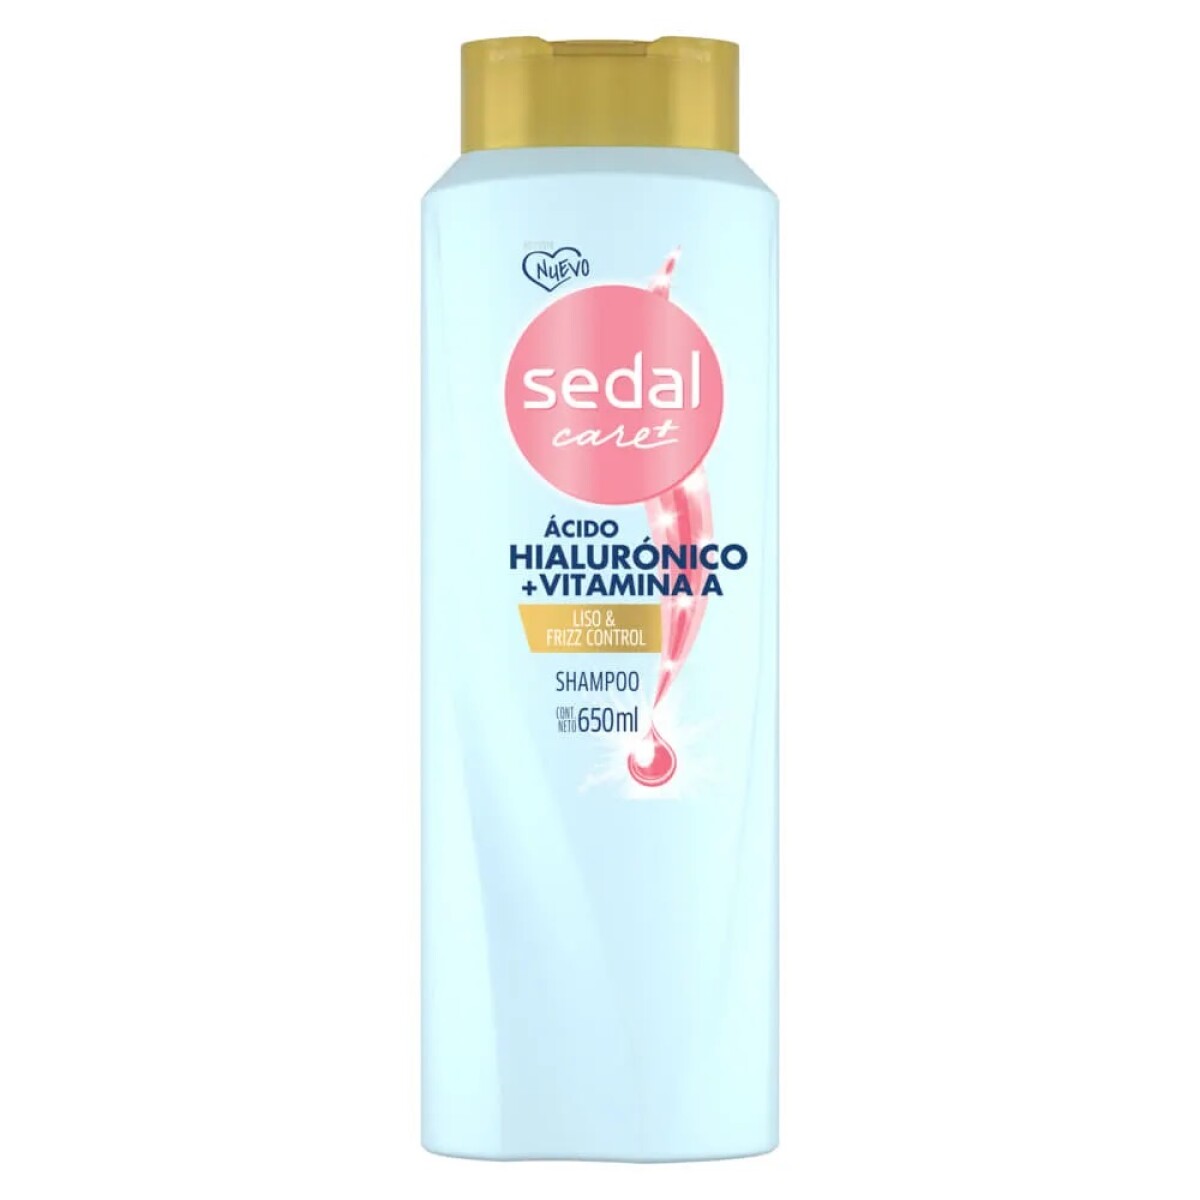 Shampoo Sedal Hialurónico+vit. A 650ml. 